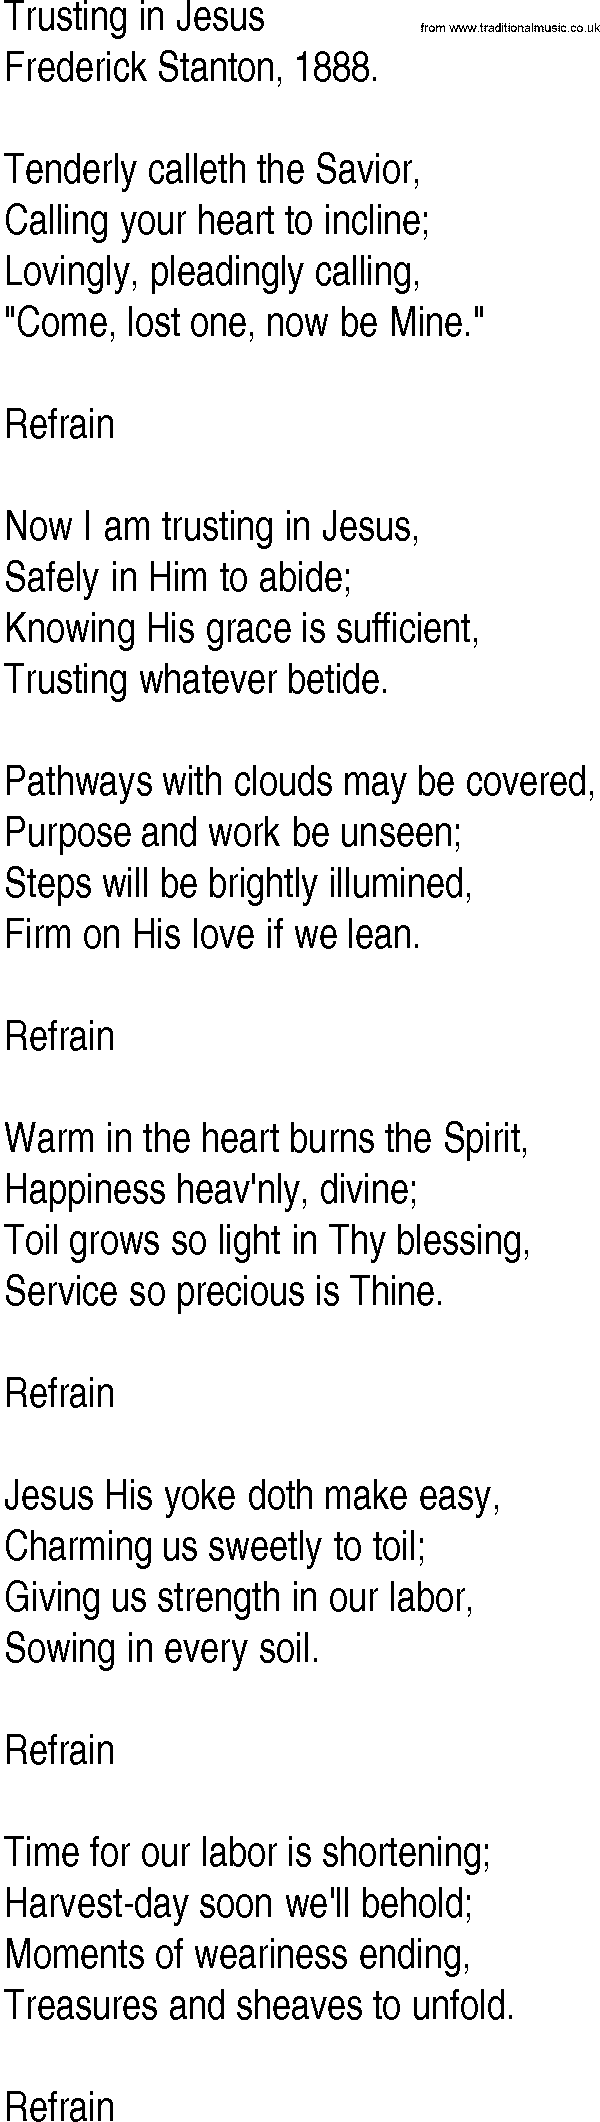 Hymn and Gospel Song: Trusting in Jesus by Frederick Stanton lyrics